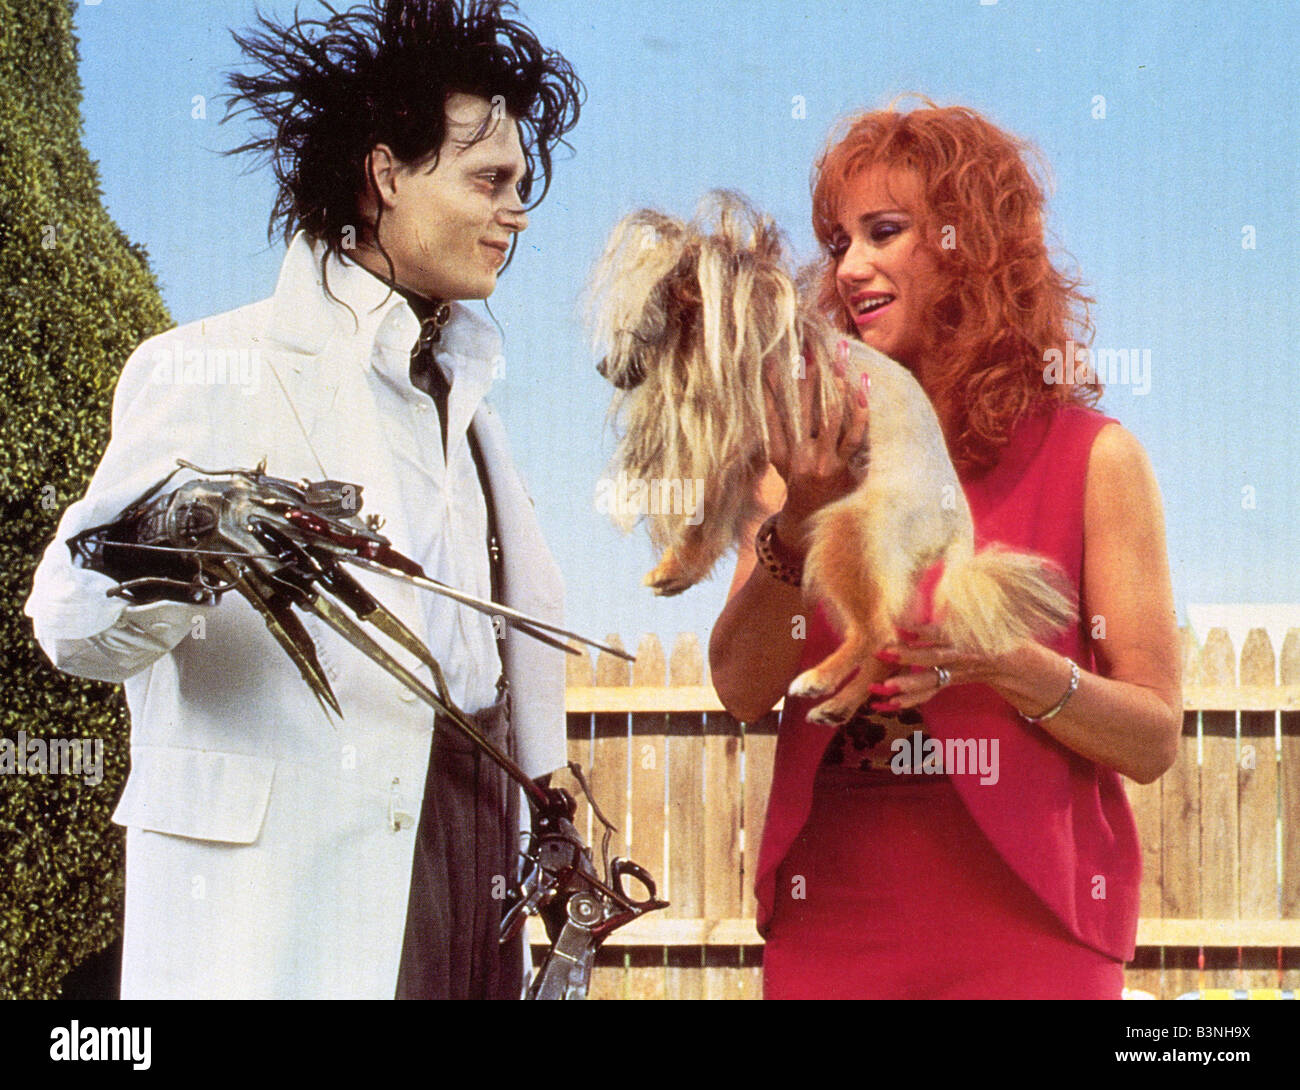 EDWARD SCISSORHANDS 1990 Fox film with Johnny Depp and Winona Ryder Stock Photo